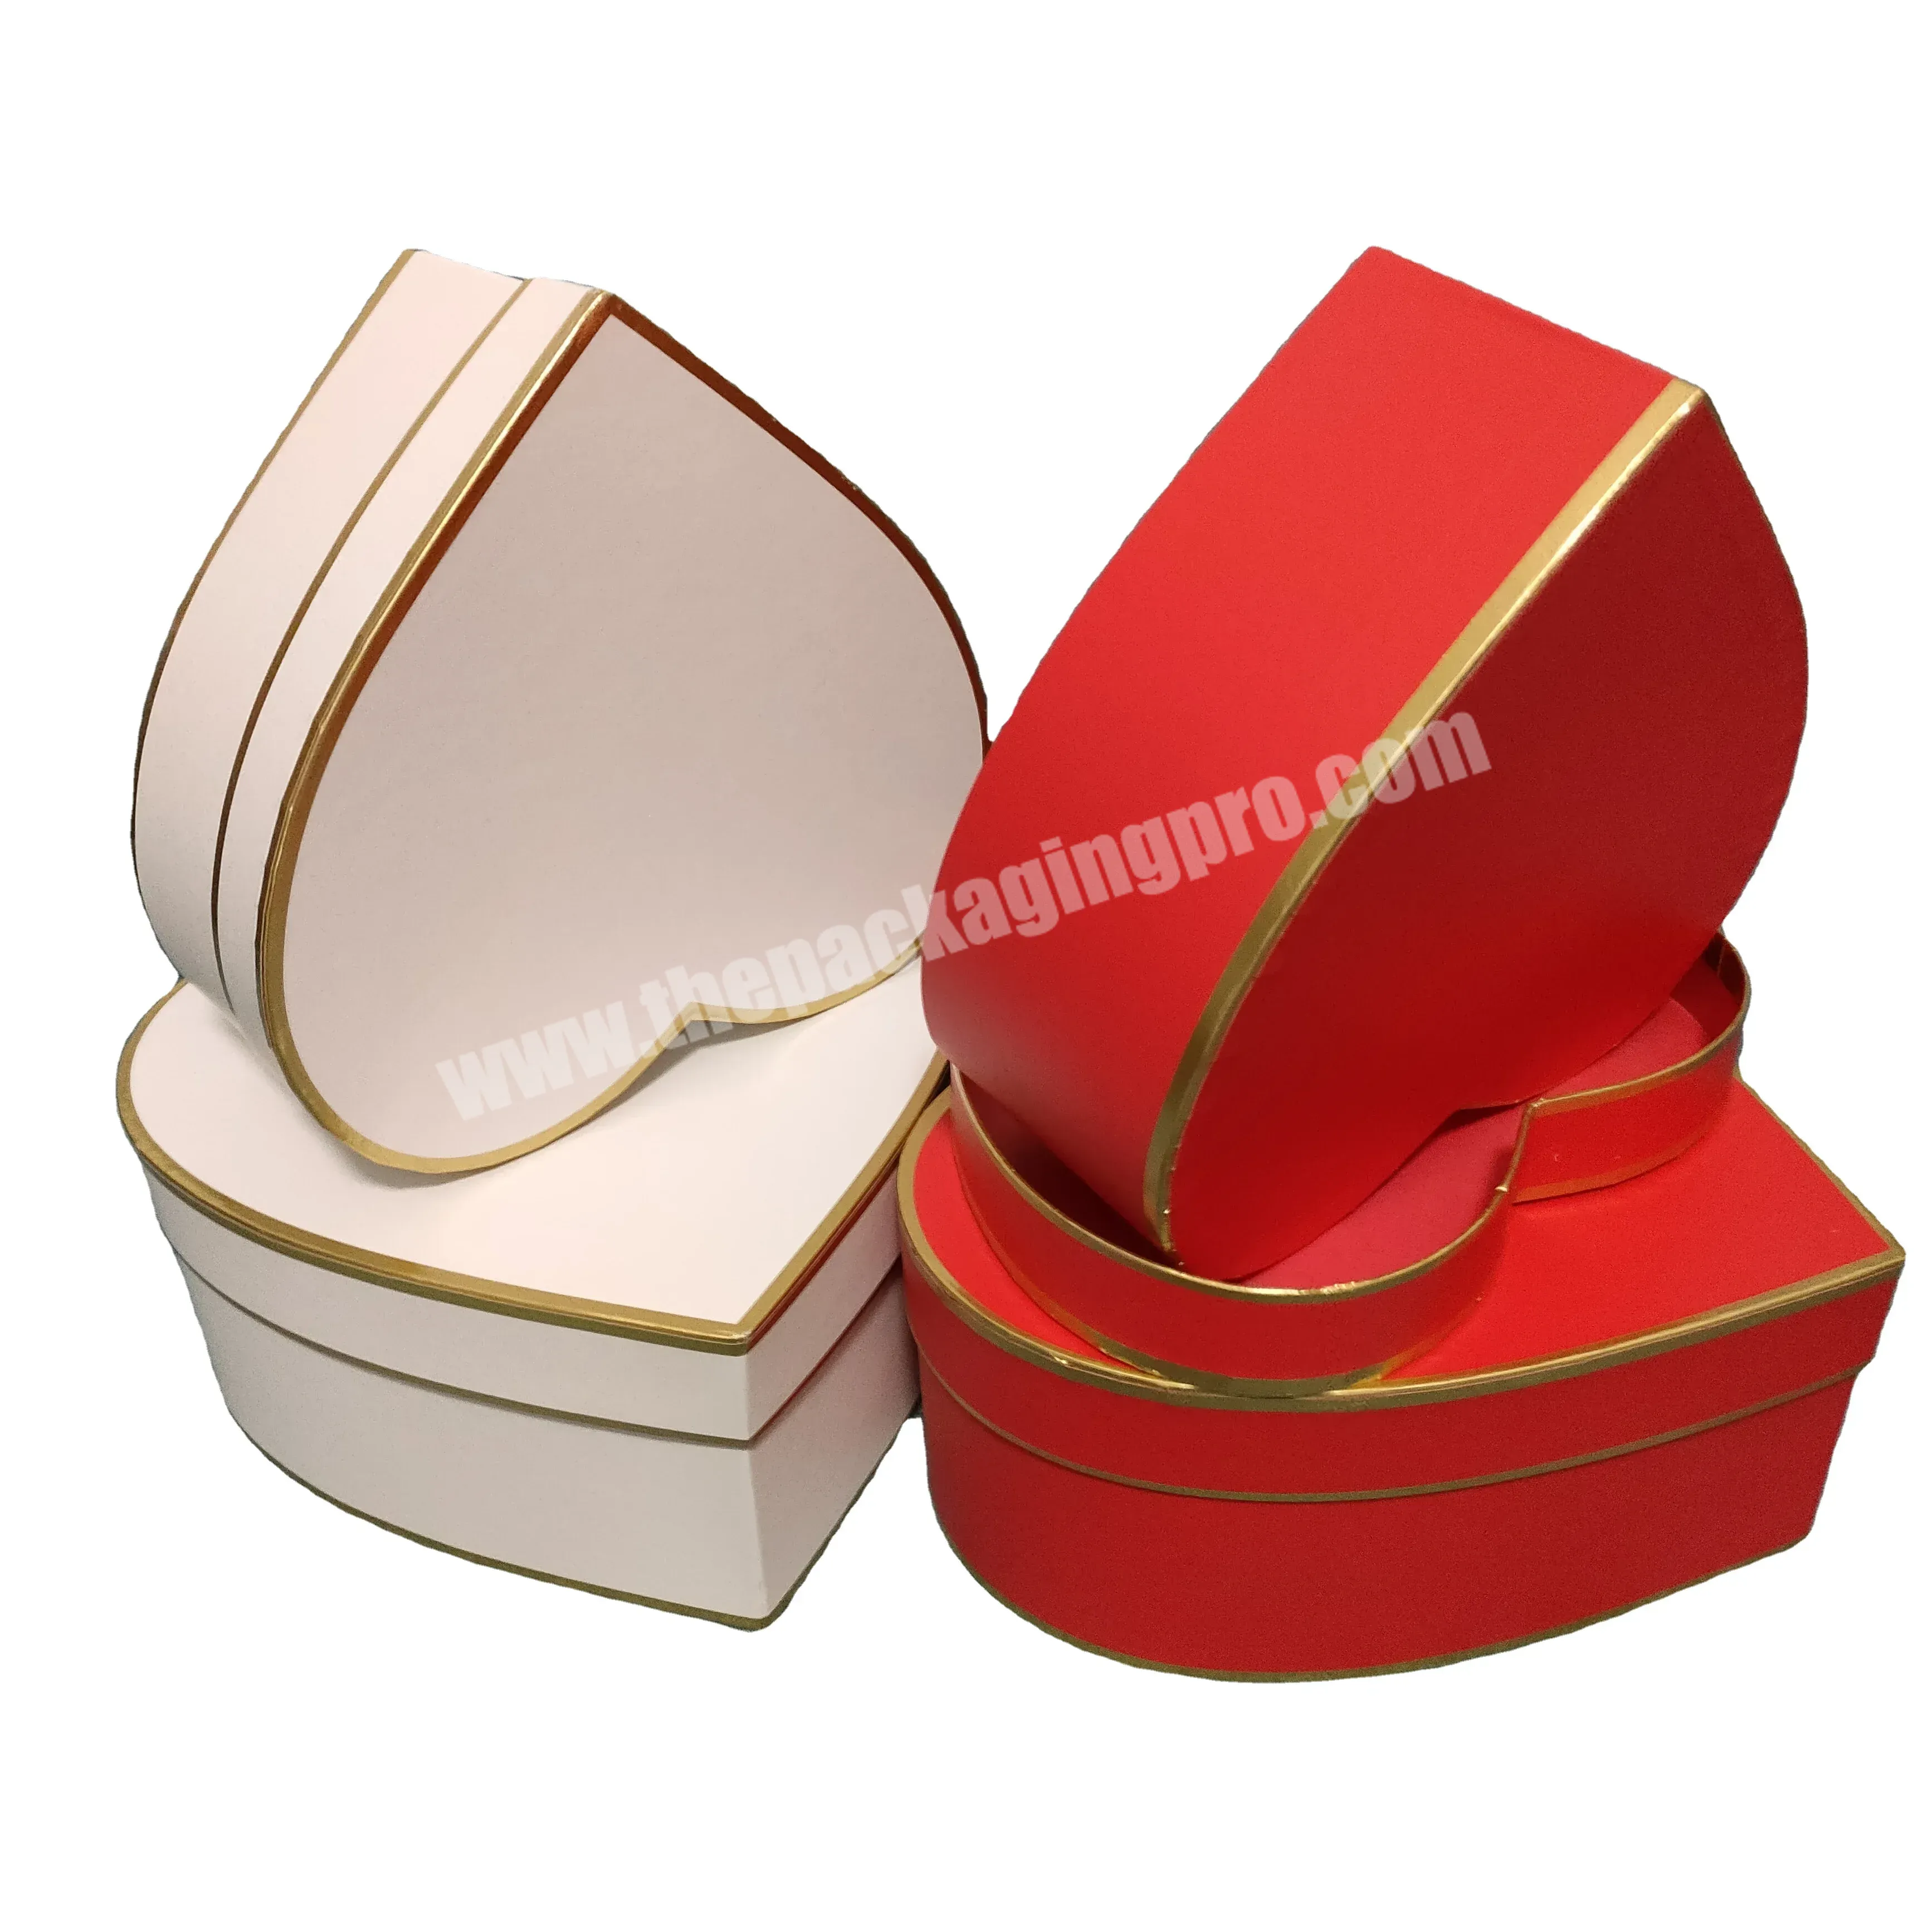 Cardboard Heart Packing Box - Buy Cardboard Heart Packing Box,Cardboard Heart Suitcase Gift Box,Cardboard Heart Suitcase Gift Box.